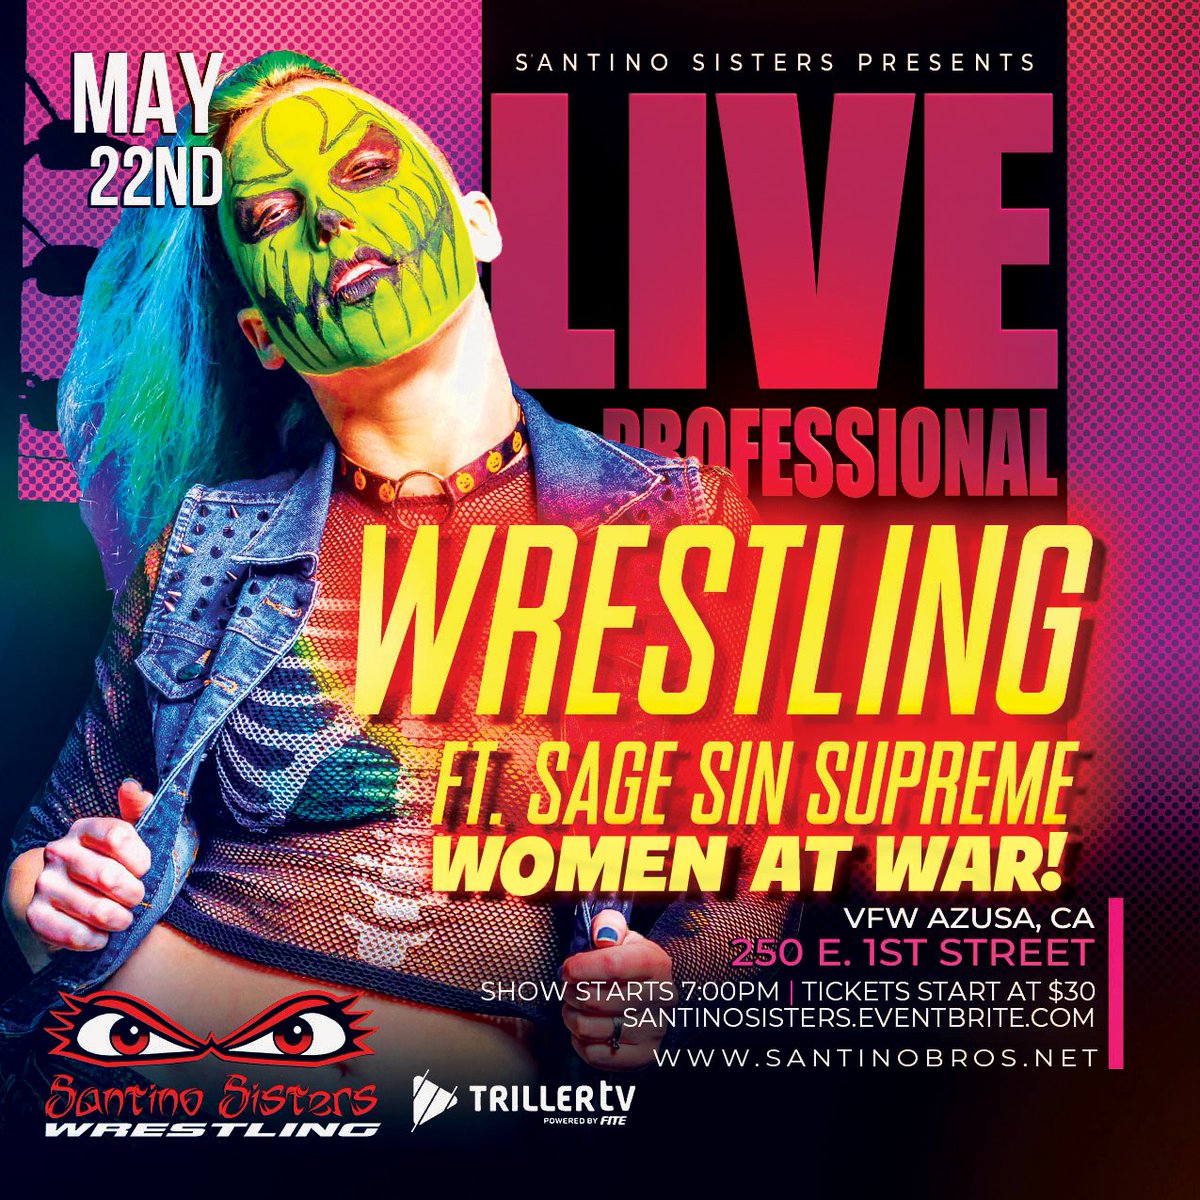 📢 𝙎𝘼𝙂𝙀 𝙎𝙄𝙉 𝙎𝙐𝙋𝙍𝙀𝙈𝙀 𝙄𝙎 𝘾𝙊𝙈𝙄𝙉𝙂 𝙏𝙊 𝙒𝙍𝙀𝘾𝙆 𝙎𝙃*𝙏!

🔥 WOMEN AT WAR!
📅 WEDNESDAY May 22nd at 7pm
📍 VFW, Azusa, CA. 91702
🎟️ SantinoSisters.eventbrite.com
📺 Streaming on #TrillerTV trillertv.com/vl/p/santino-b…